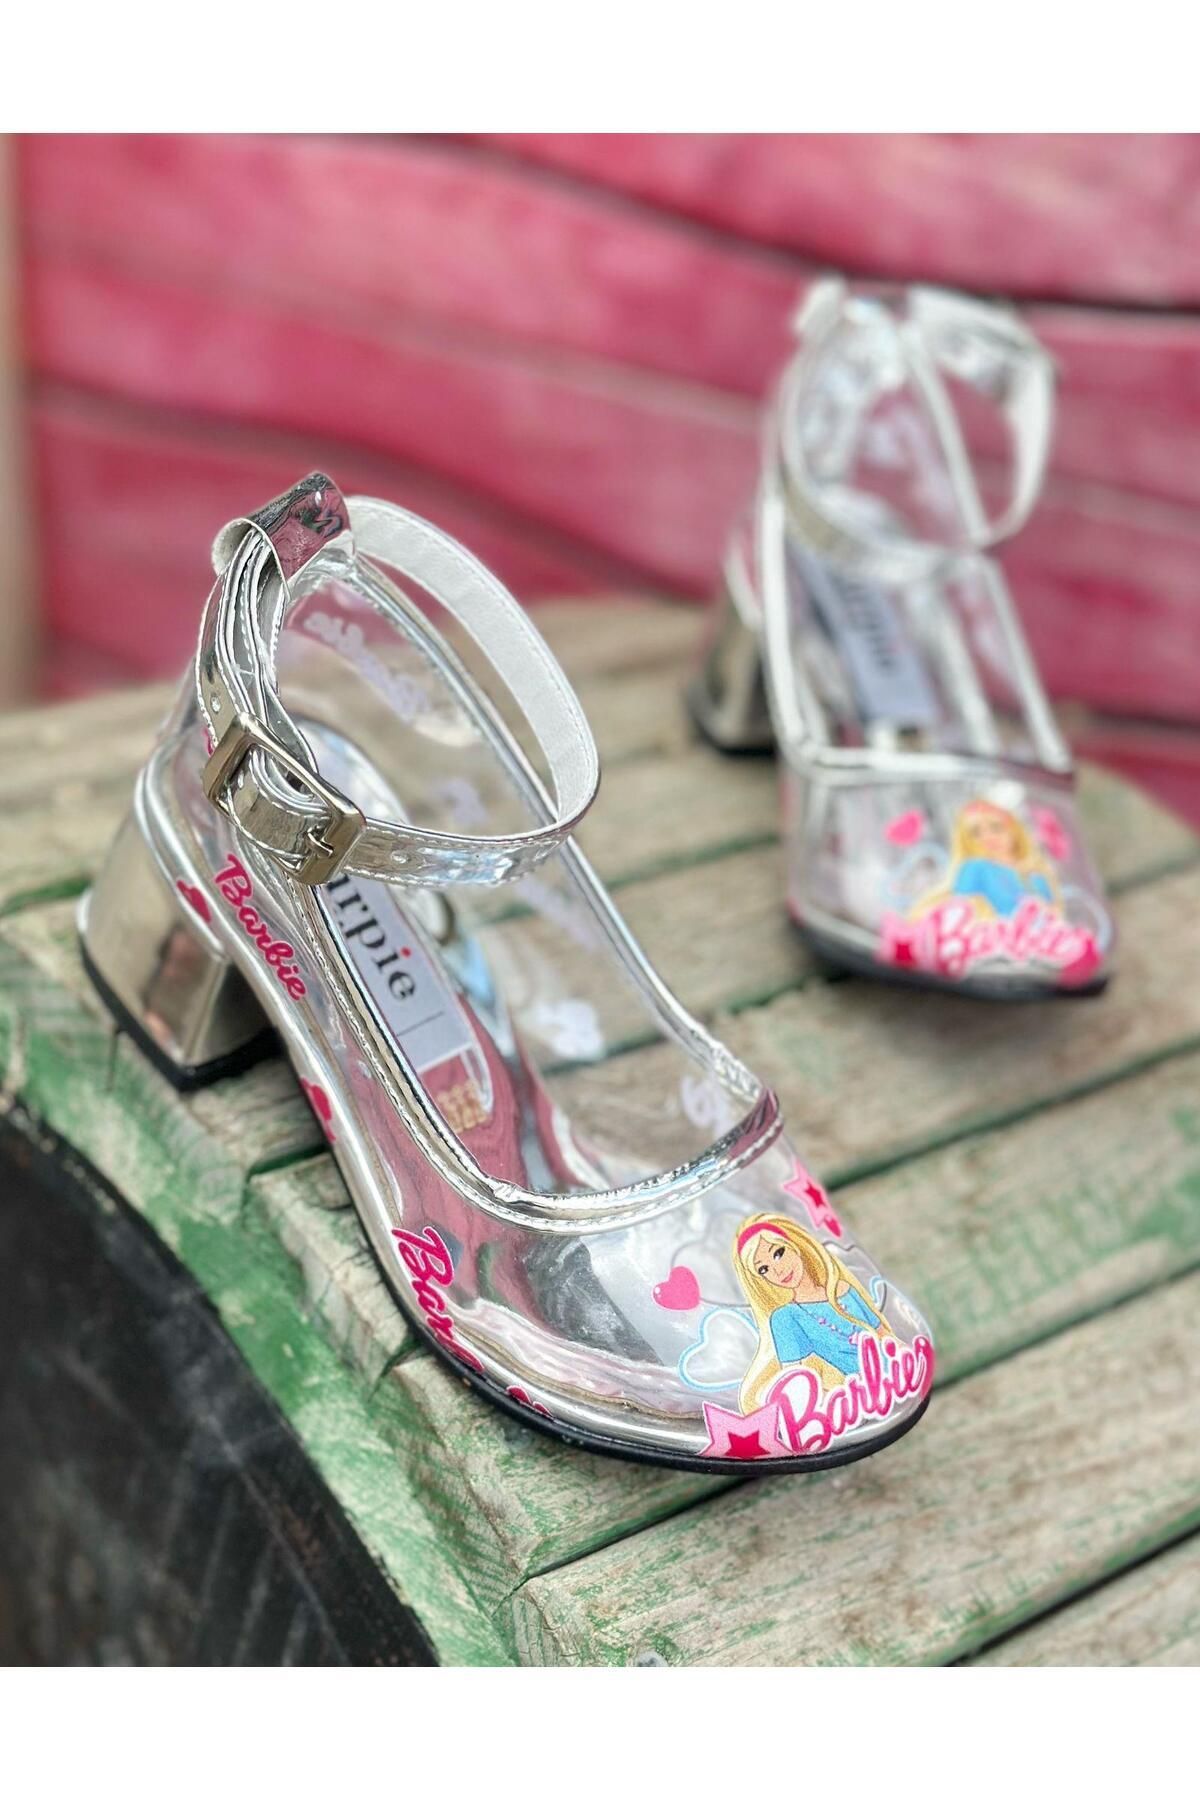 Surpie Shoes Barbie Topuklu Ayakkabı, Barbie Ayakkabı, Çocuk Topuklu Ayakkabı